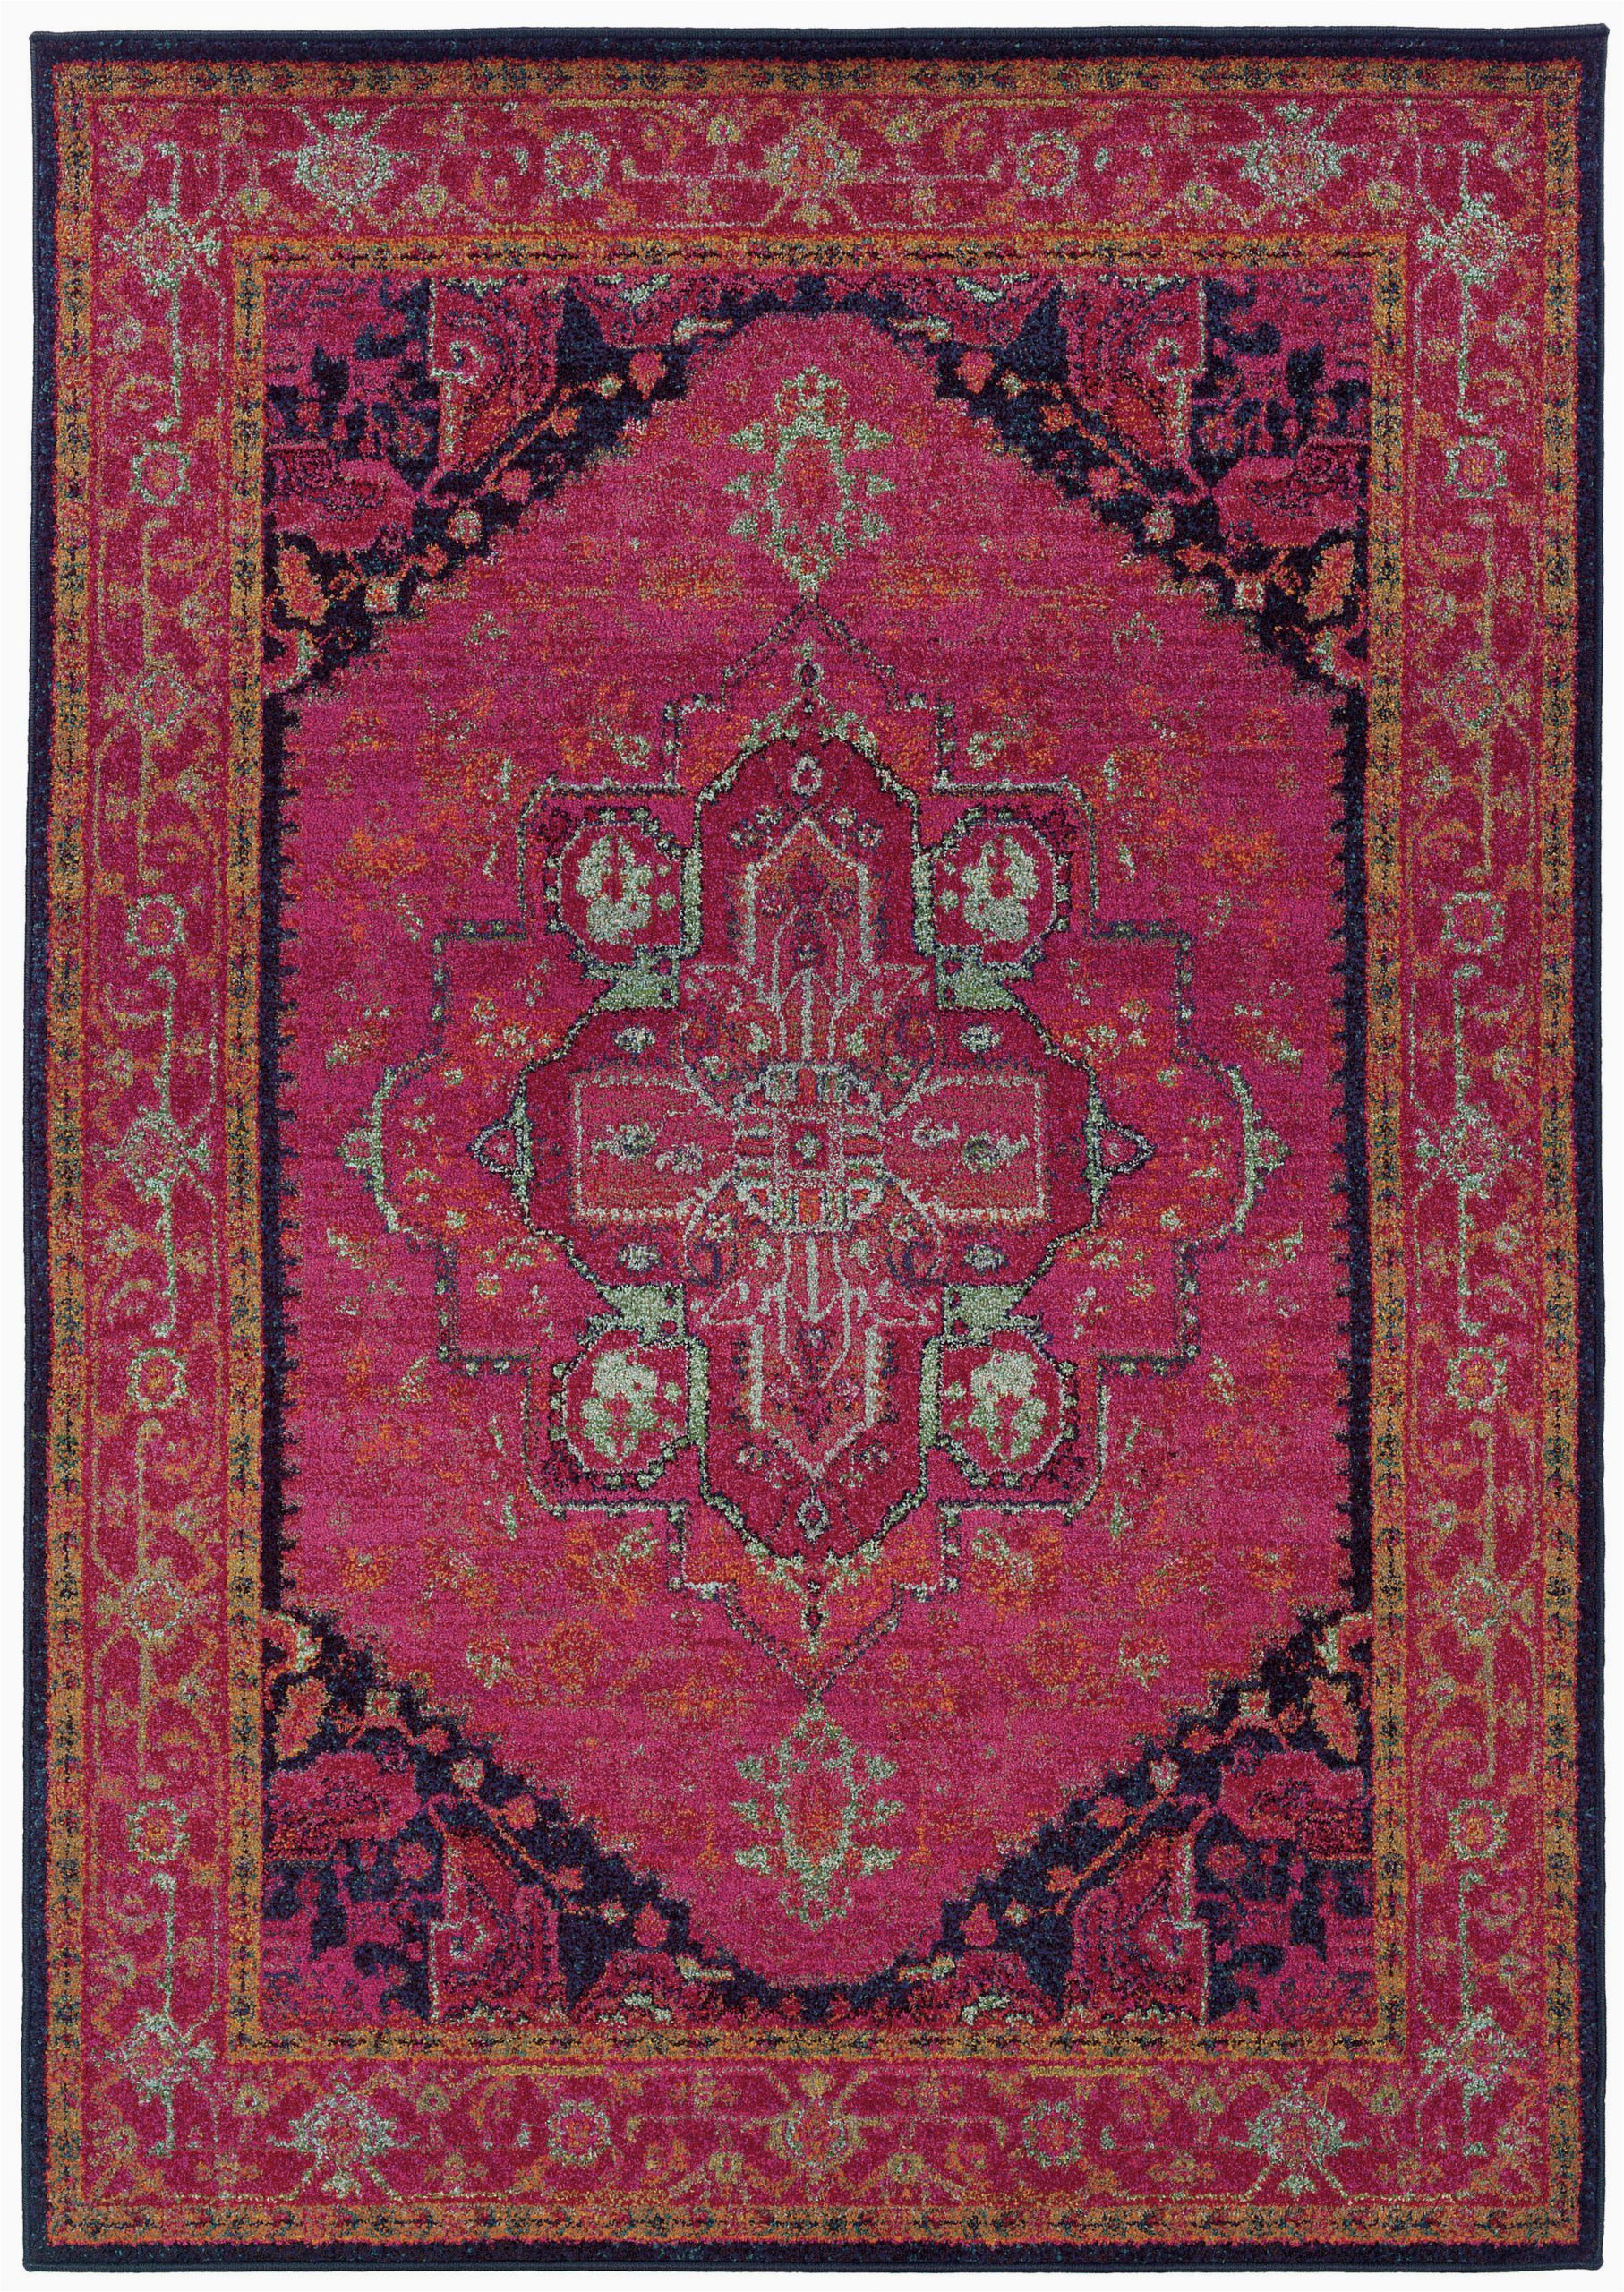 kaleidoscope oriental pinkblackblue area rug